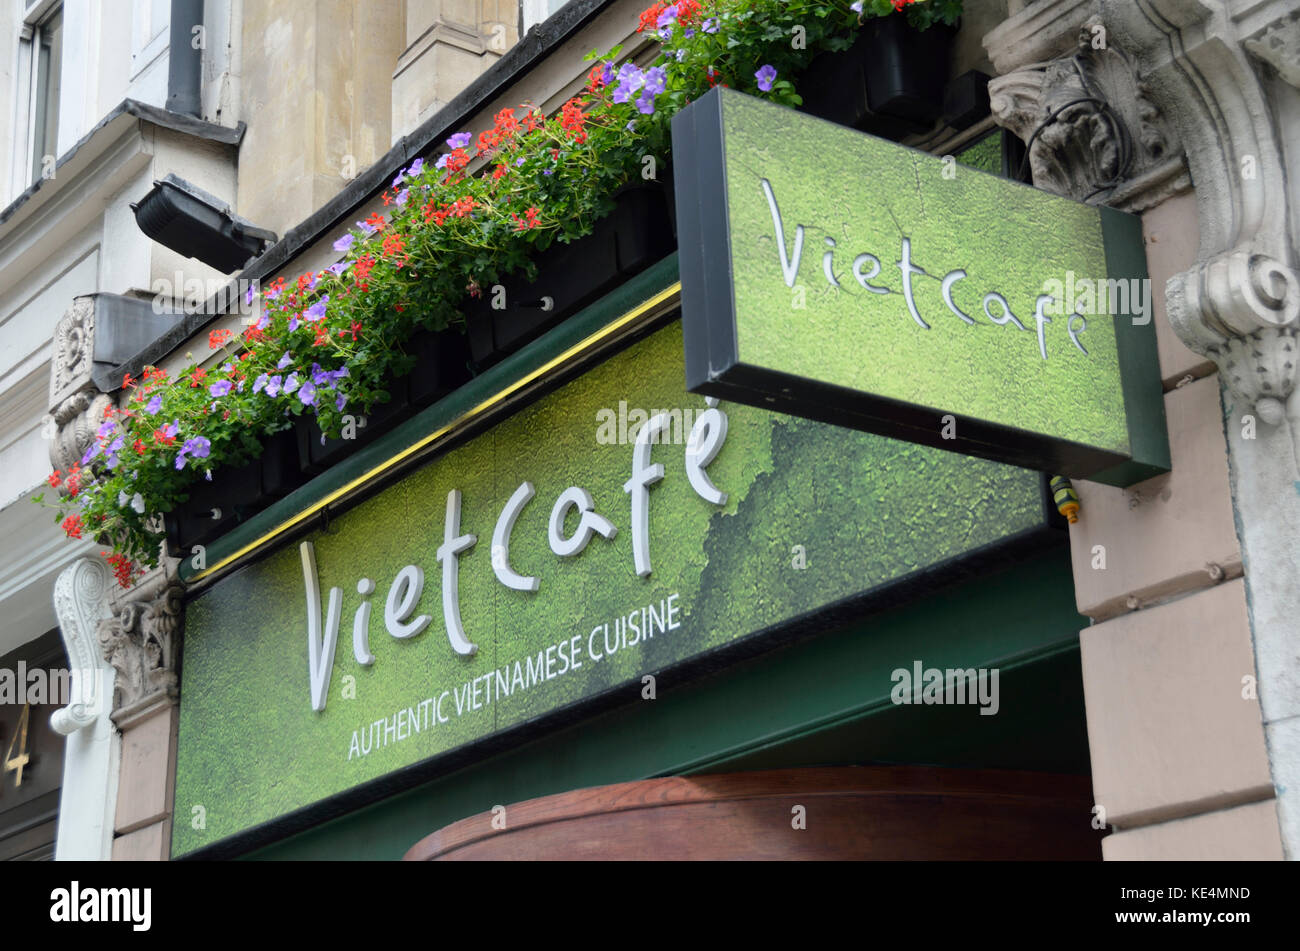 VietCafe Vietnamese restaurant in Haymarket, London, UK. Stock Photo